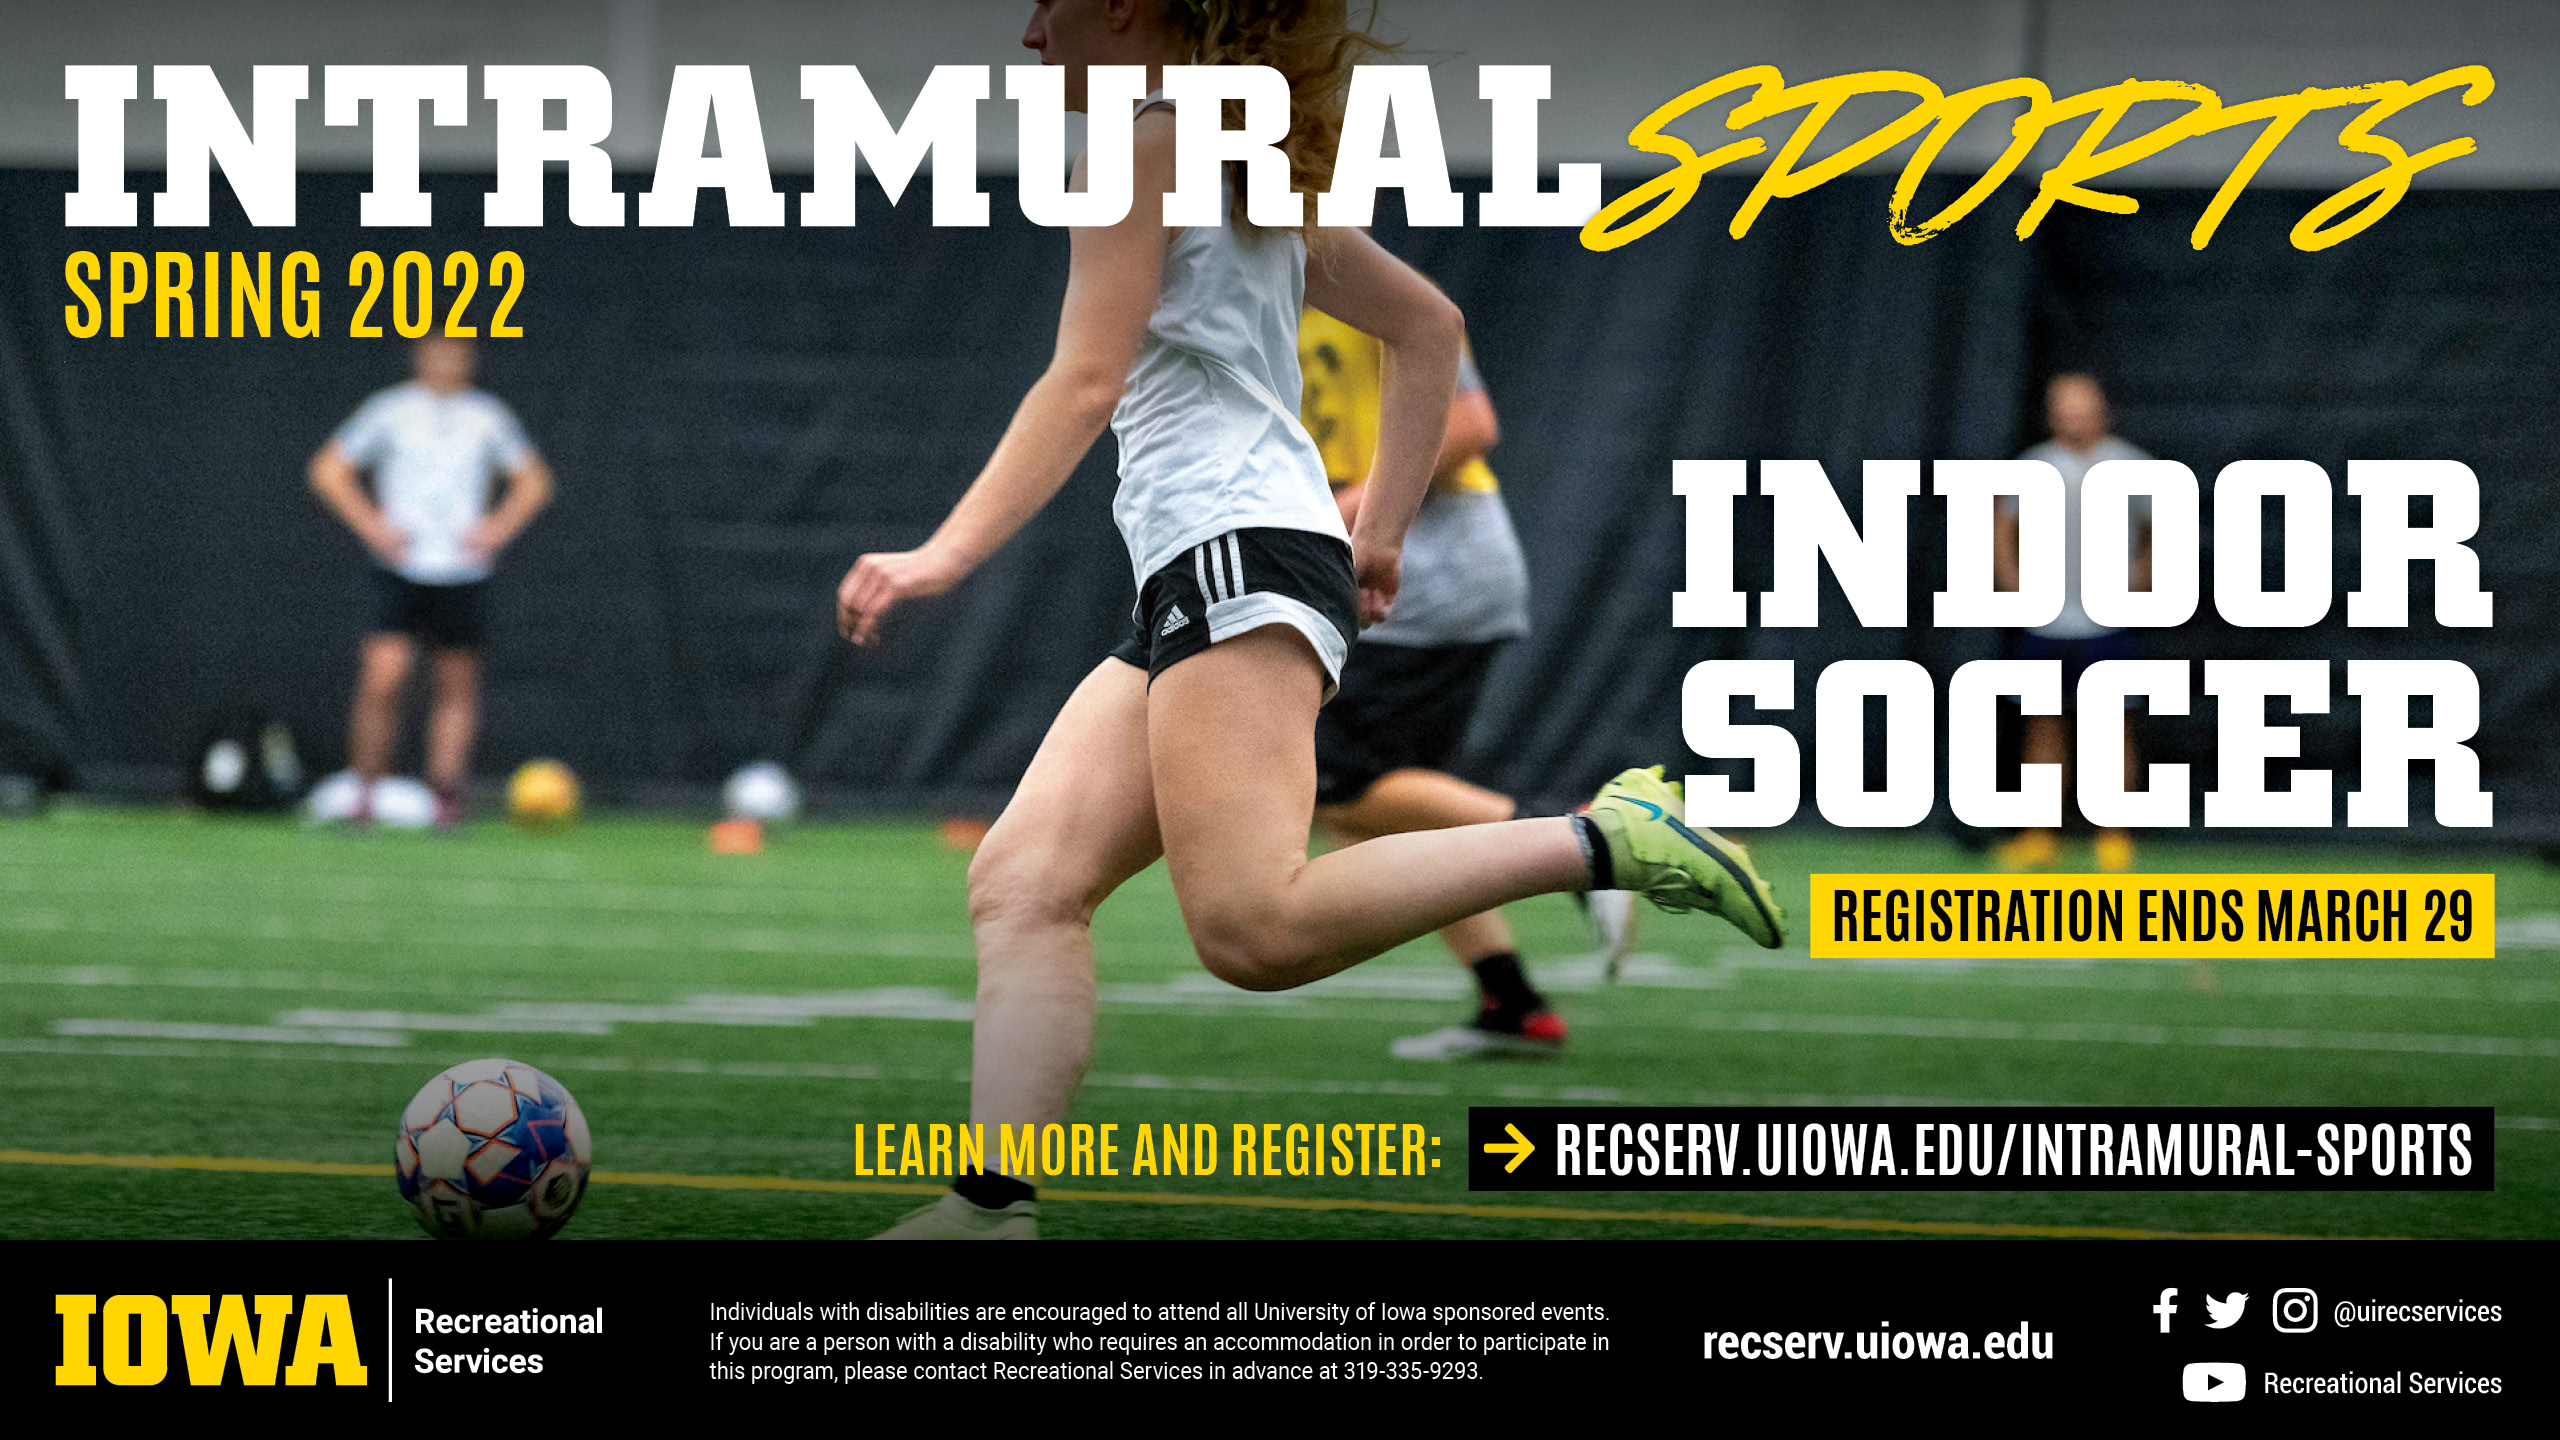 Intramural Sports Spring 2022 Indoor Soccer Registration ends March 29 learn more and register at: recserv.uiowa.edu/intramural-sports